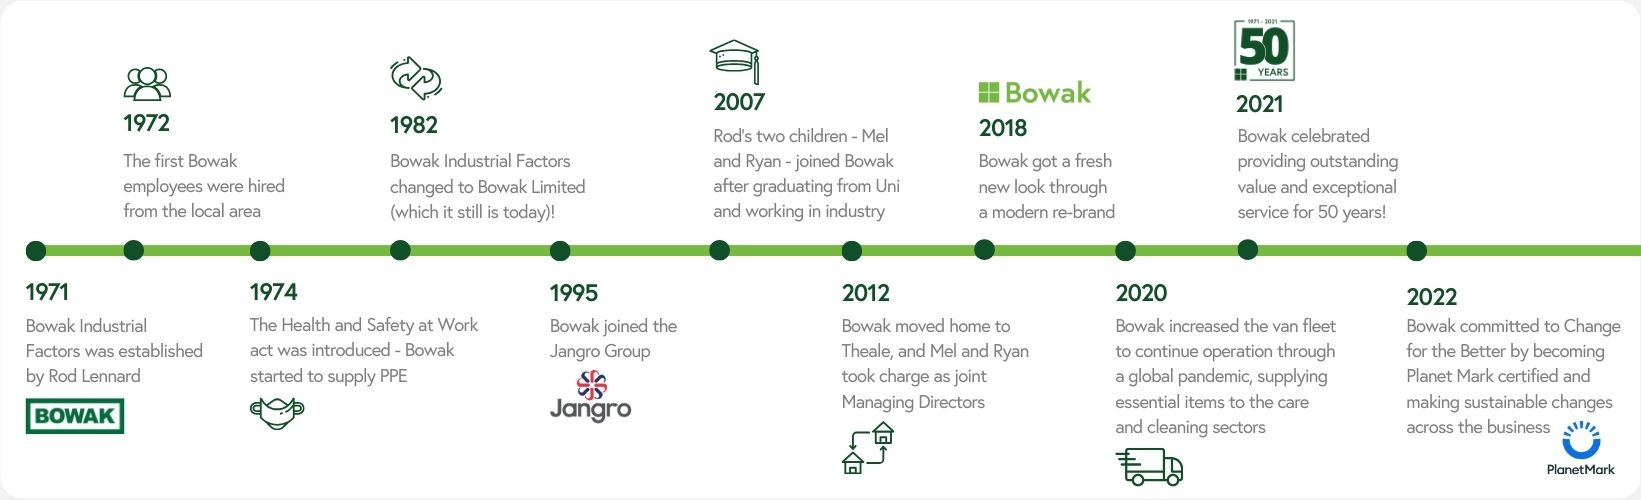 The Bowak Journey